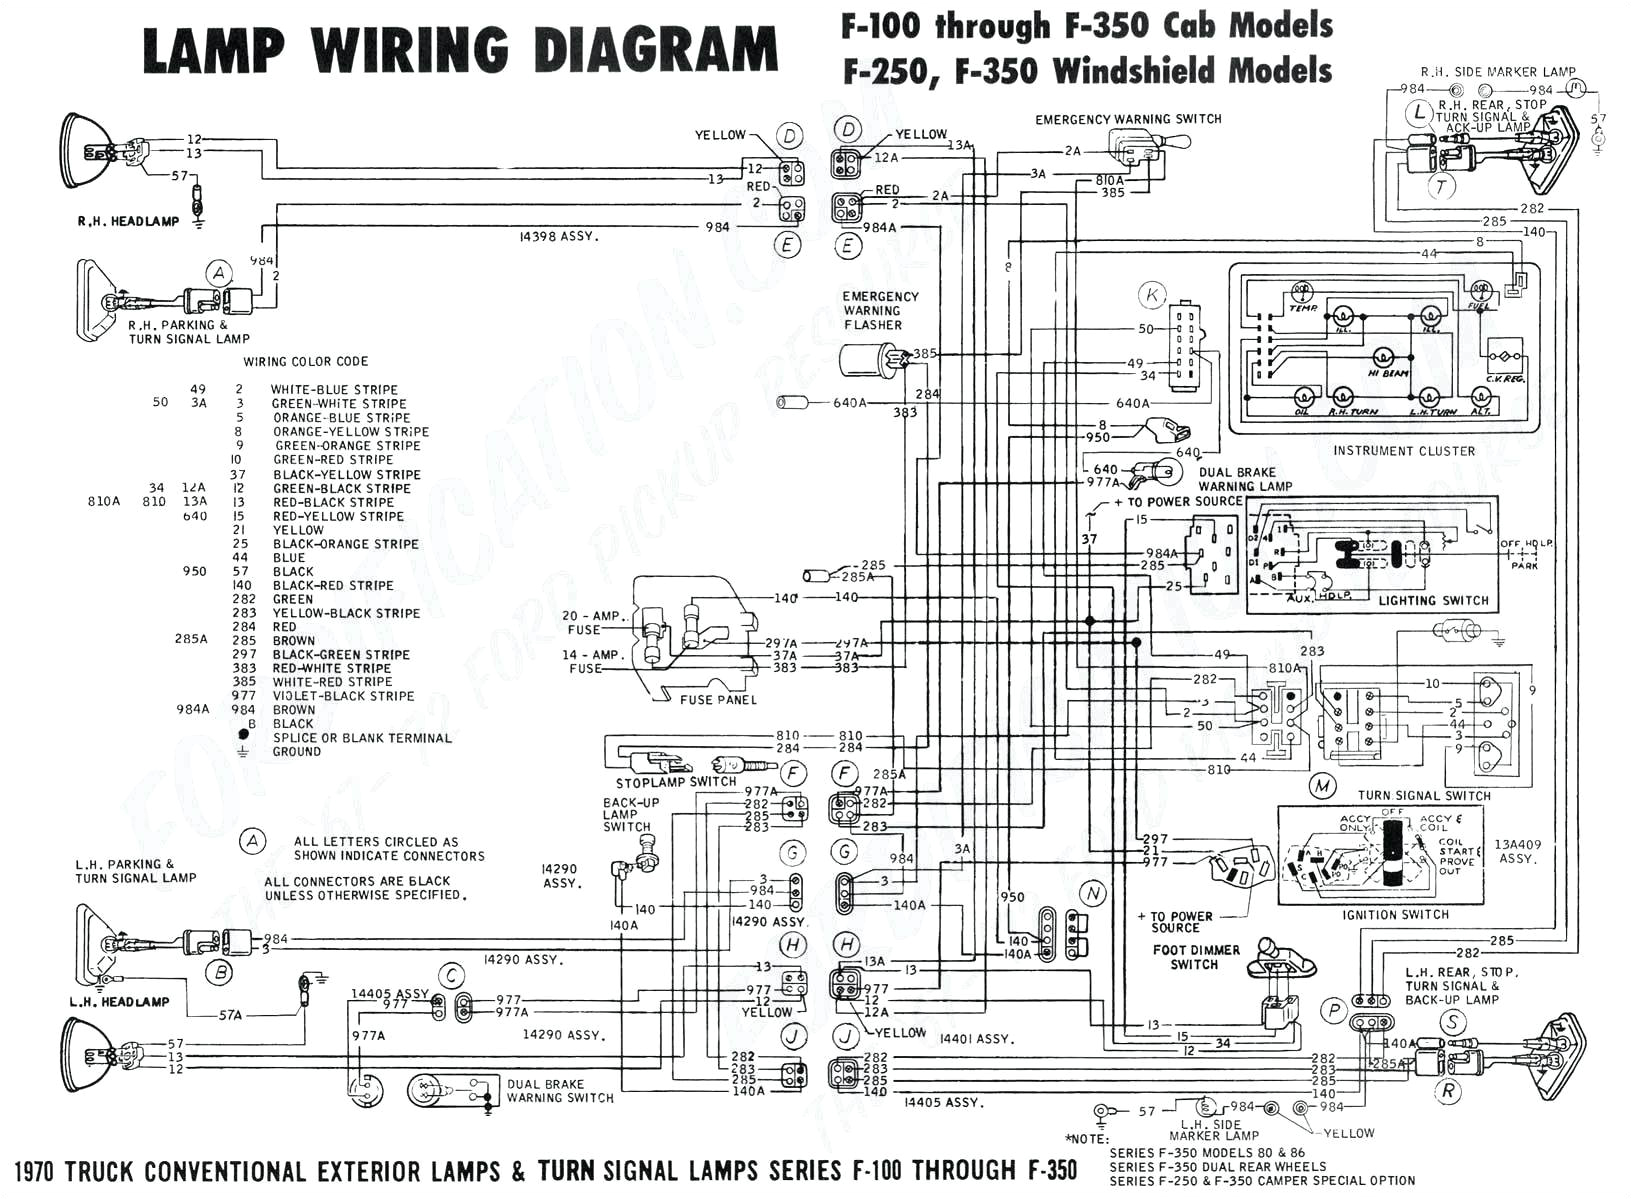 1997 Honda Crv Wiring Diagram Wiring Diagram 1997 Honda Civic Cooling Fan Wiring Circuit Diagram